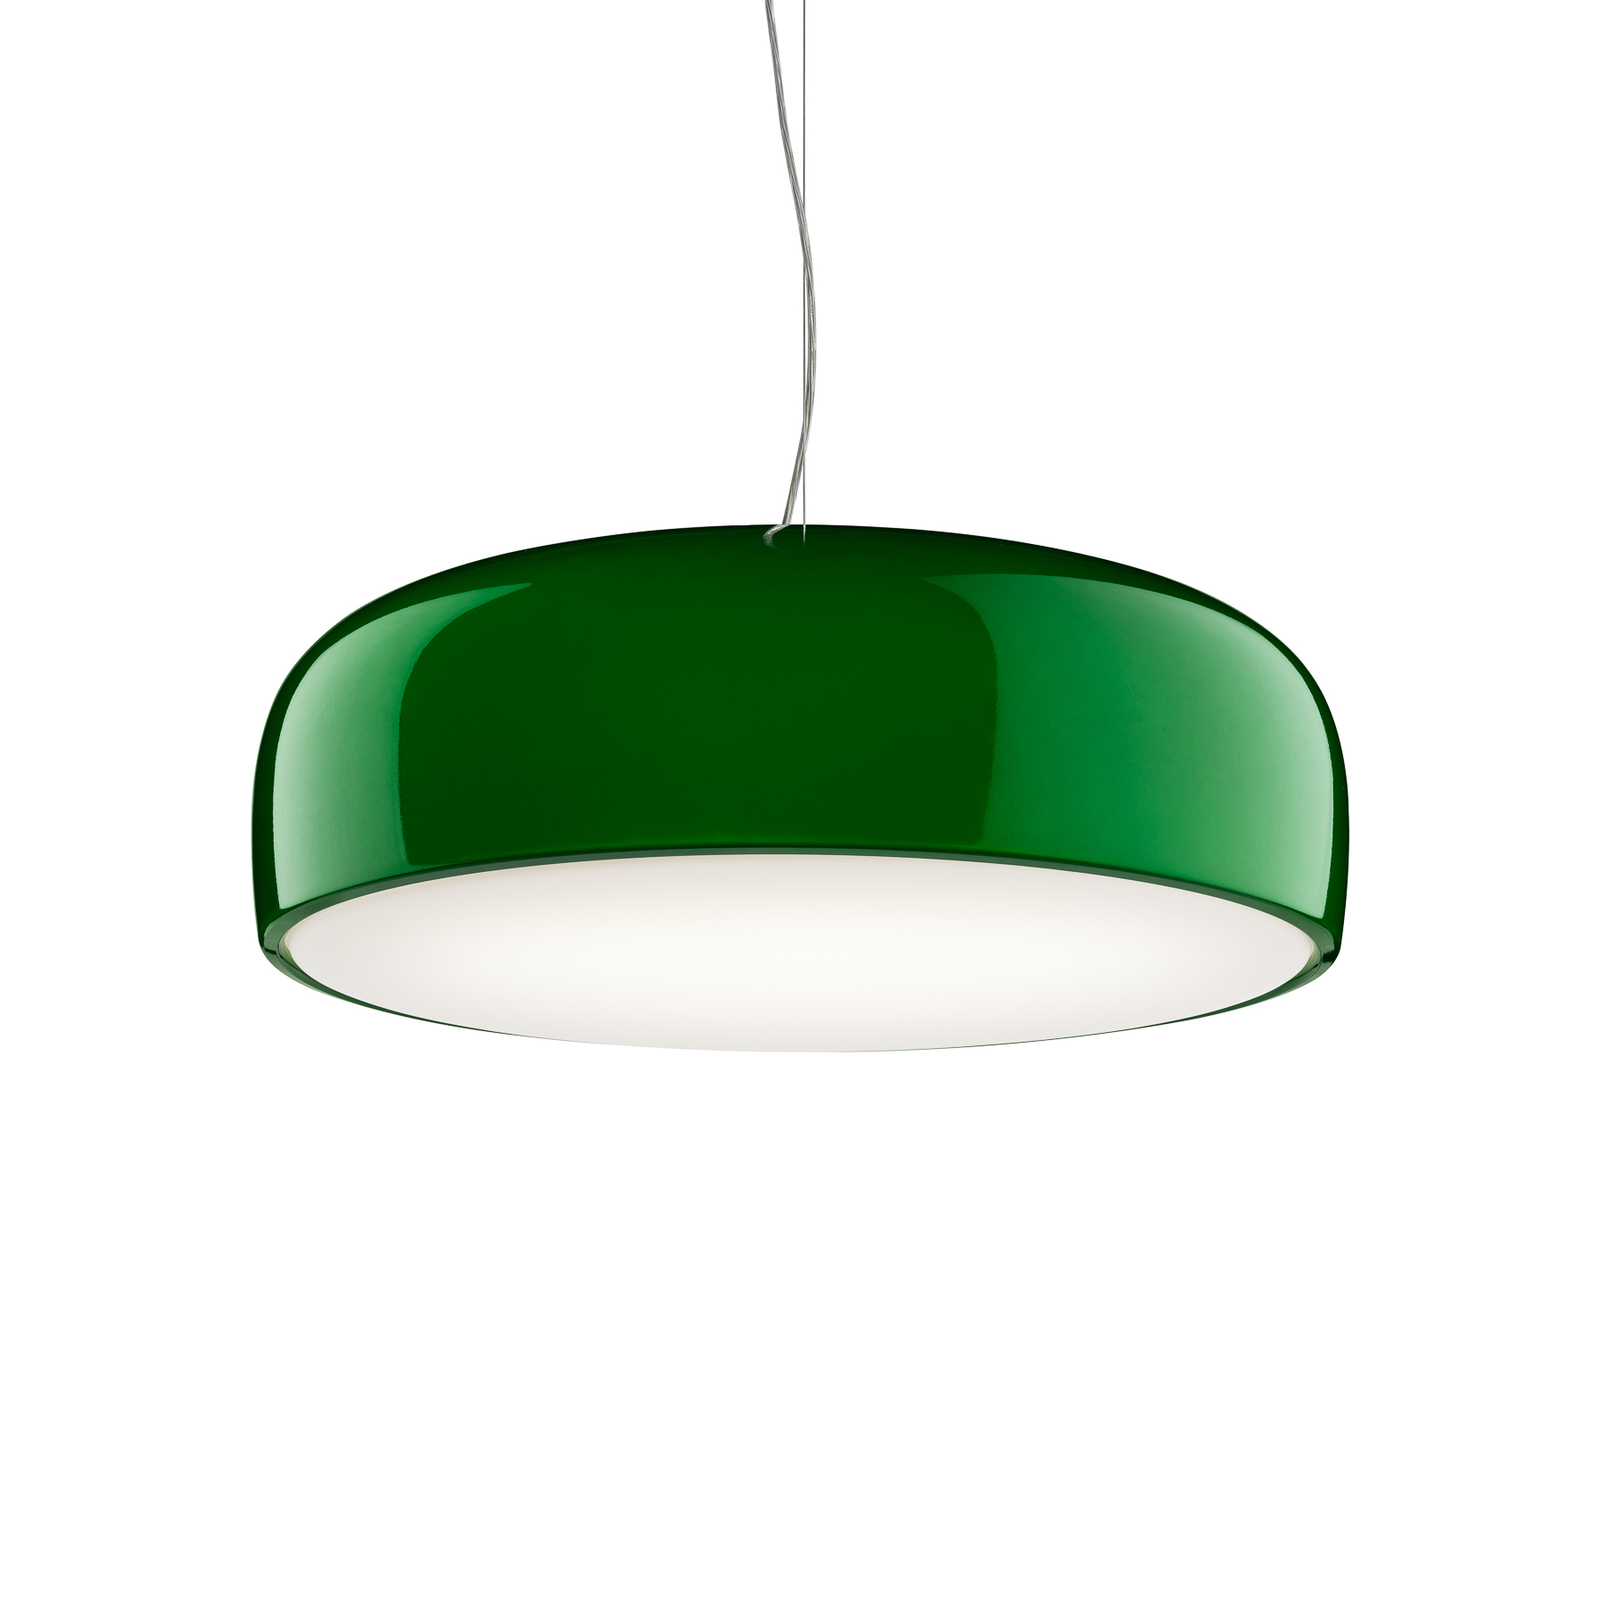 FLOS Smithfield S LED pendant light in green